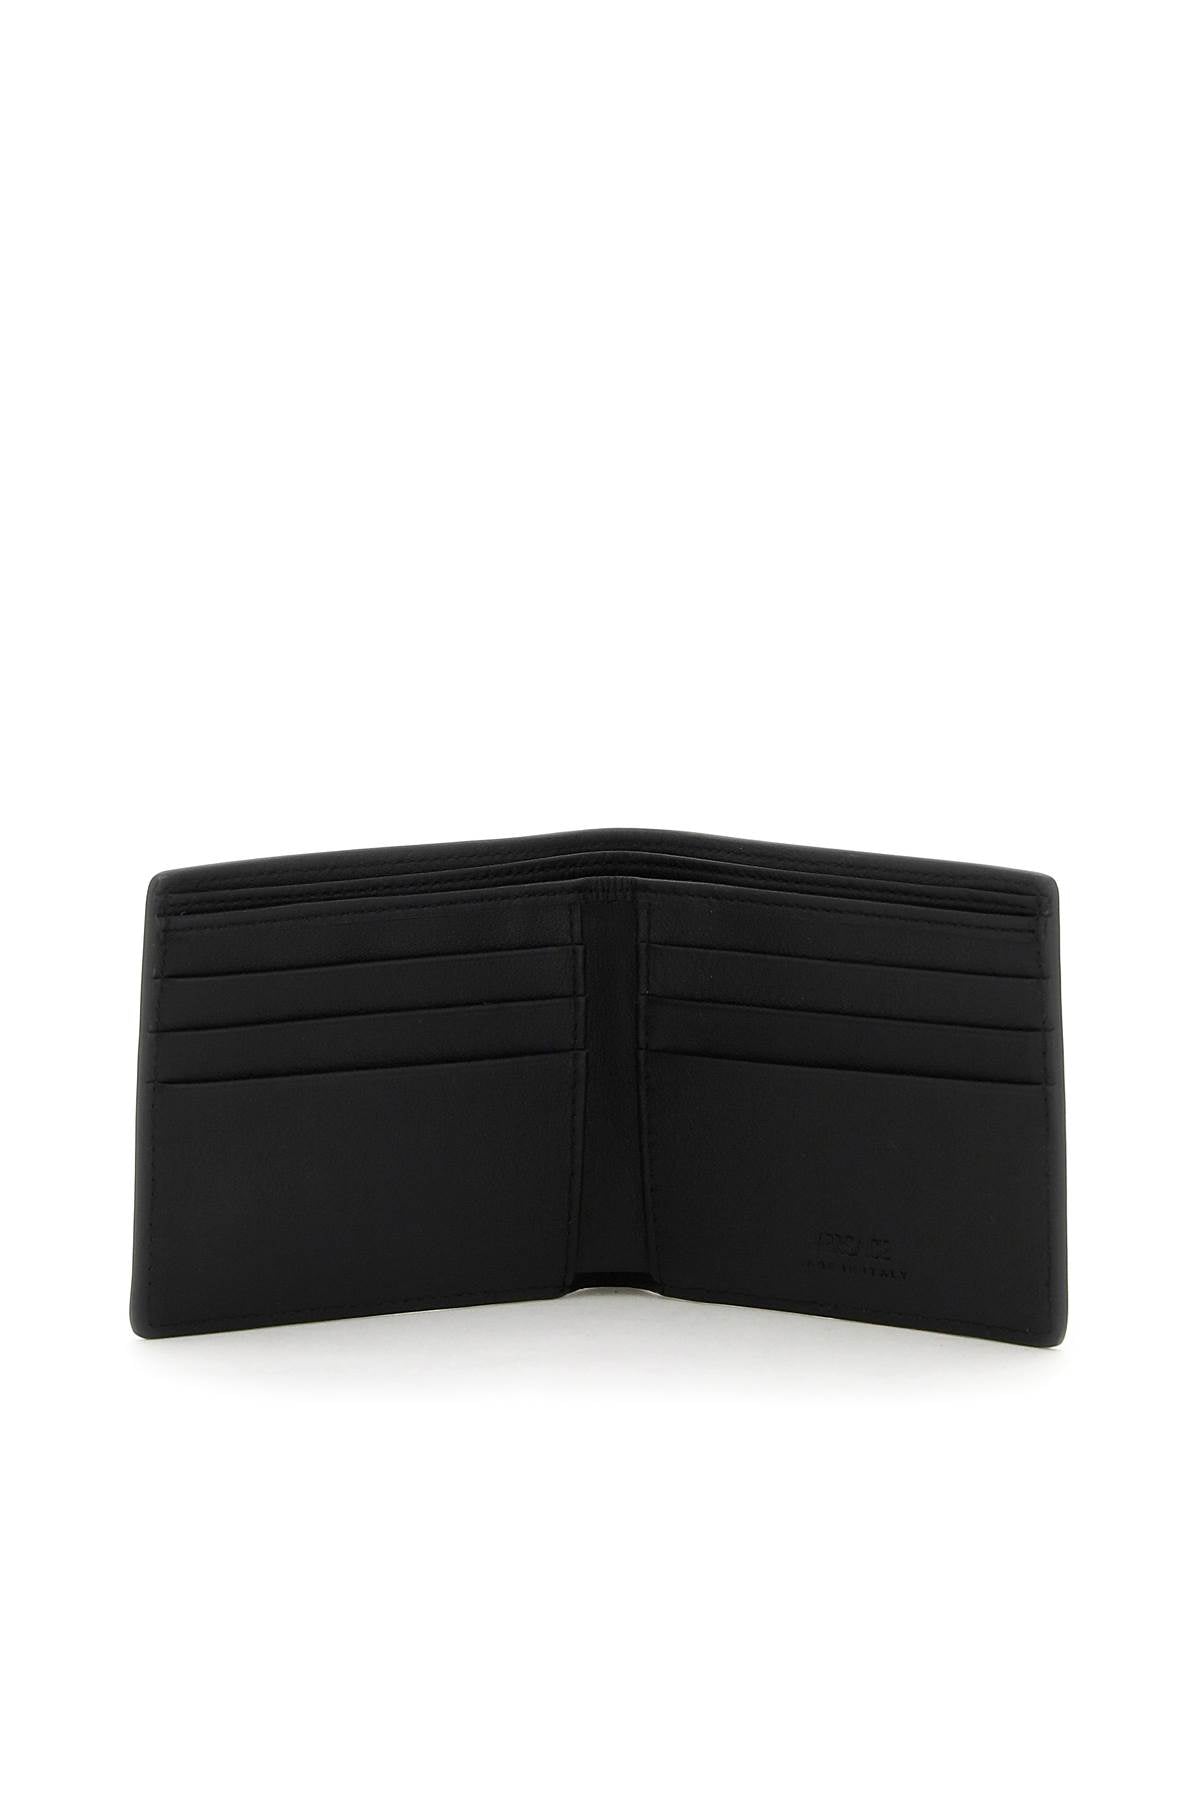 Versace Medusa Biggie Bi Fold Wallet   Black